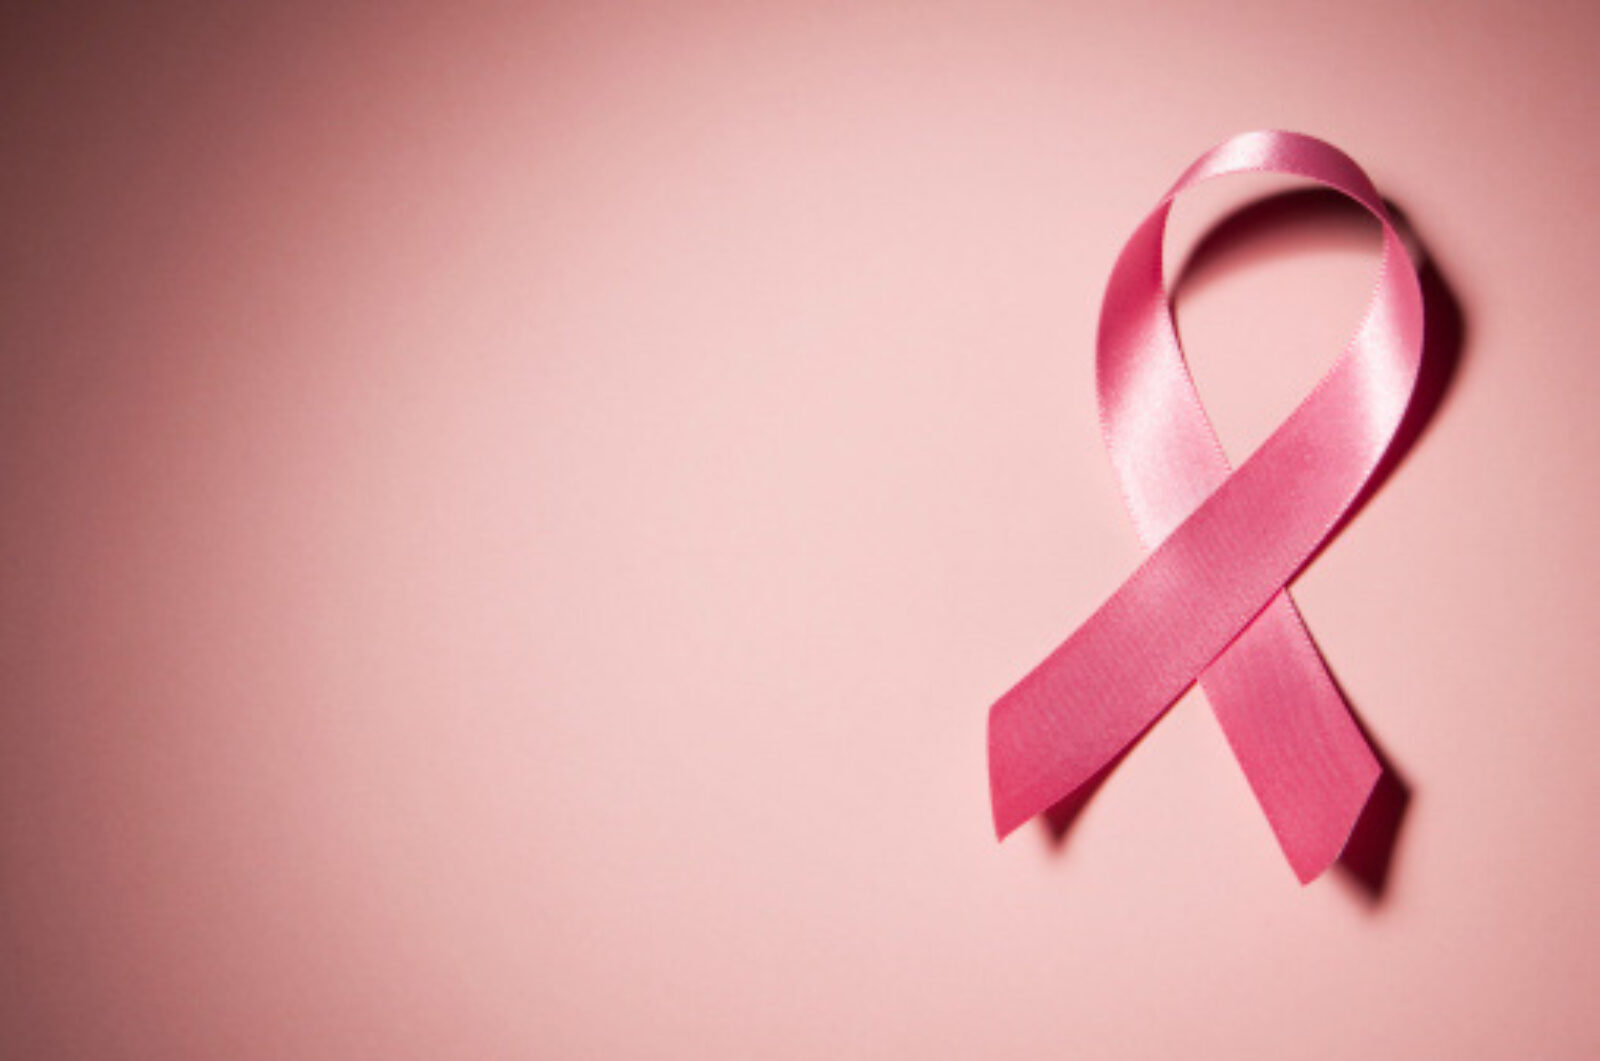 Riverside Goes Pink for Breast Cancer Awareness – Location Change!